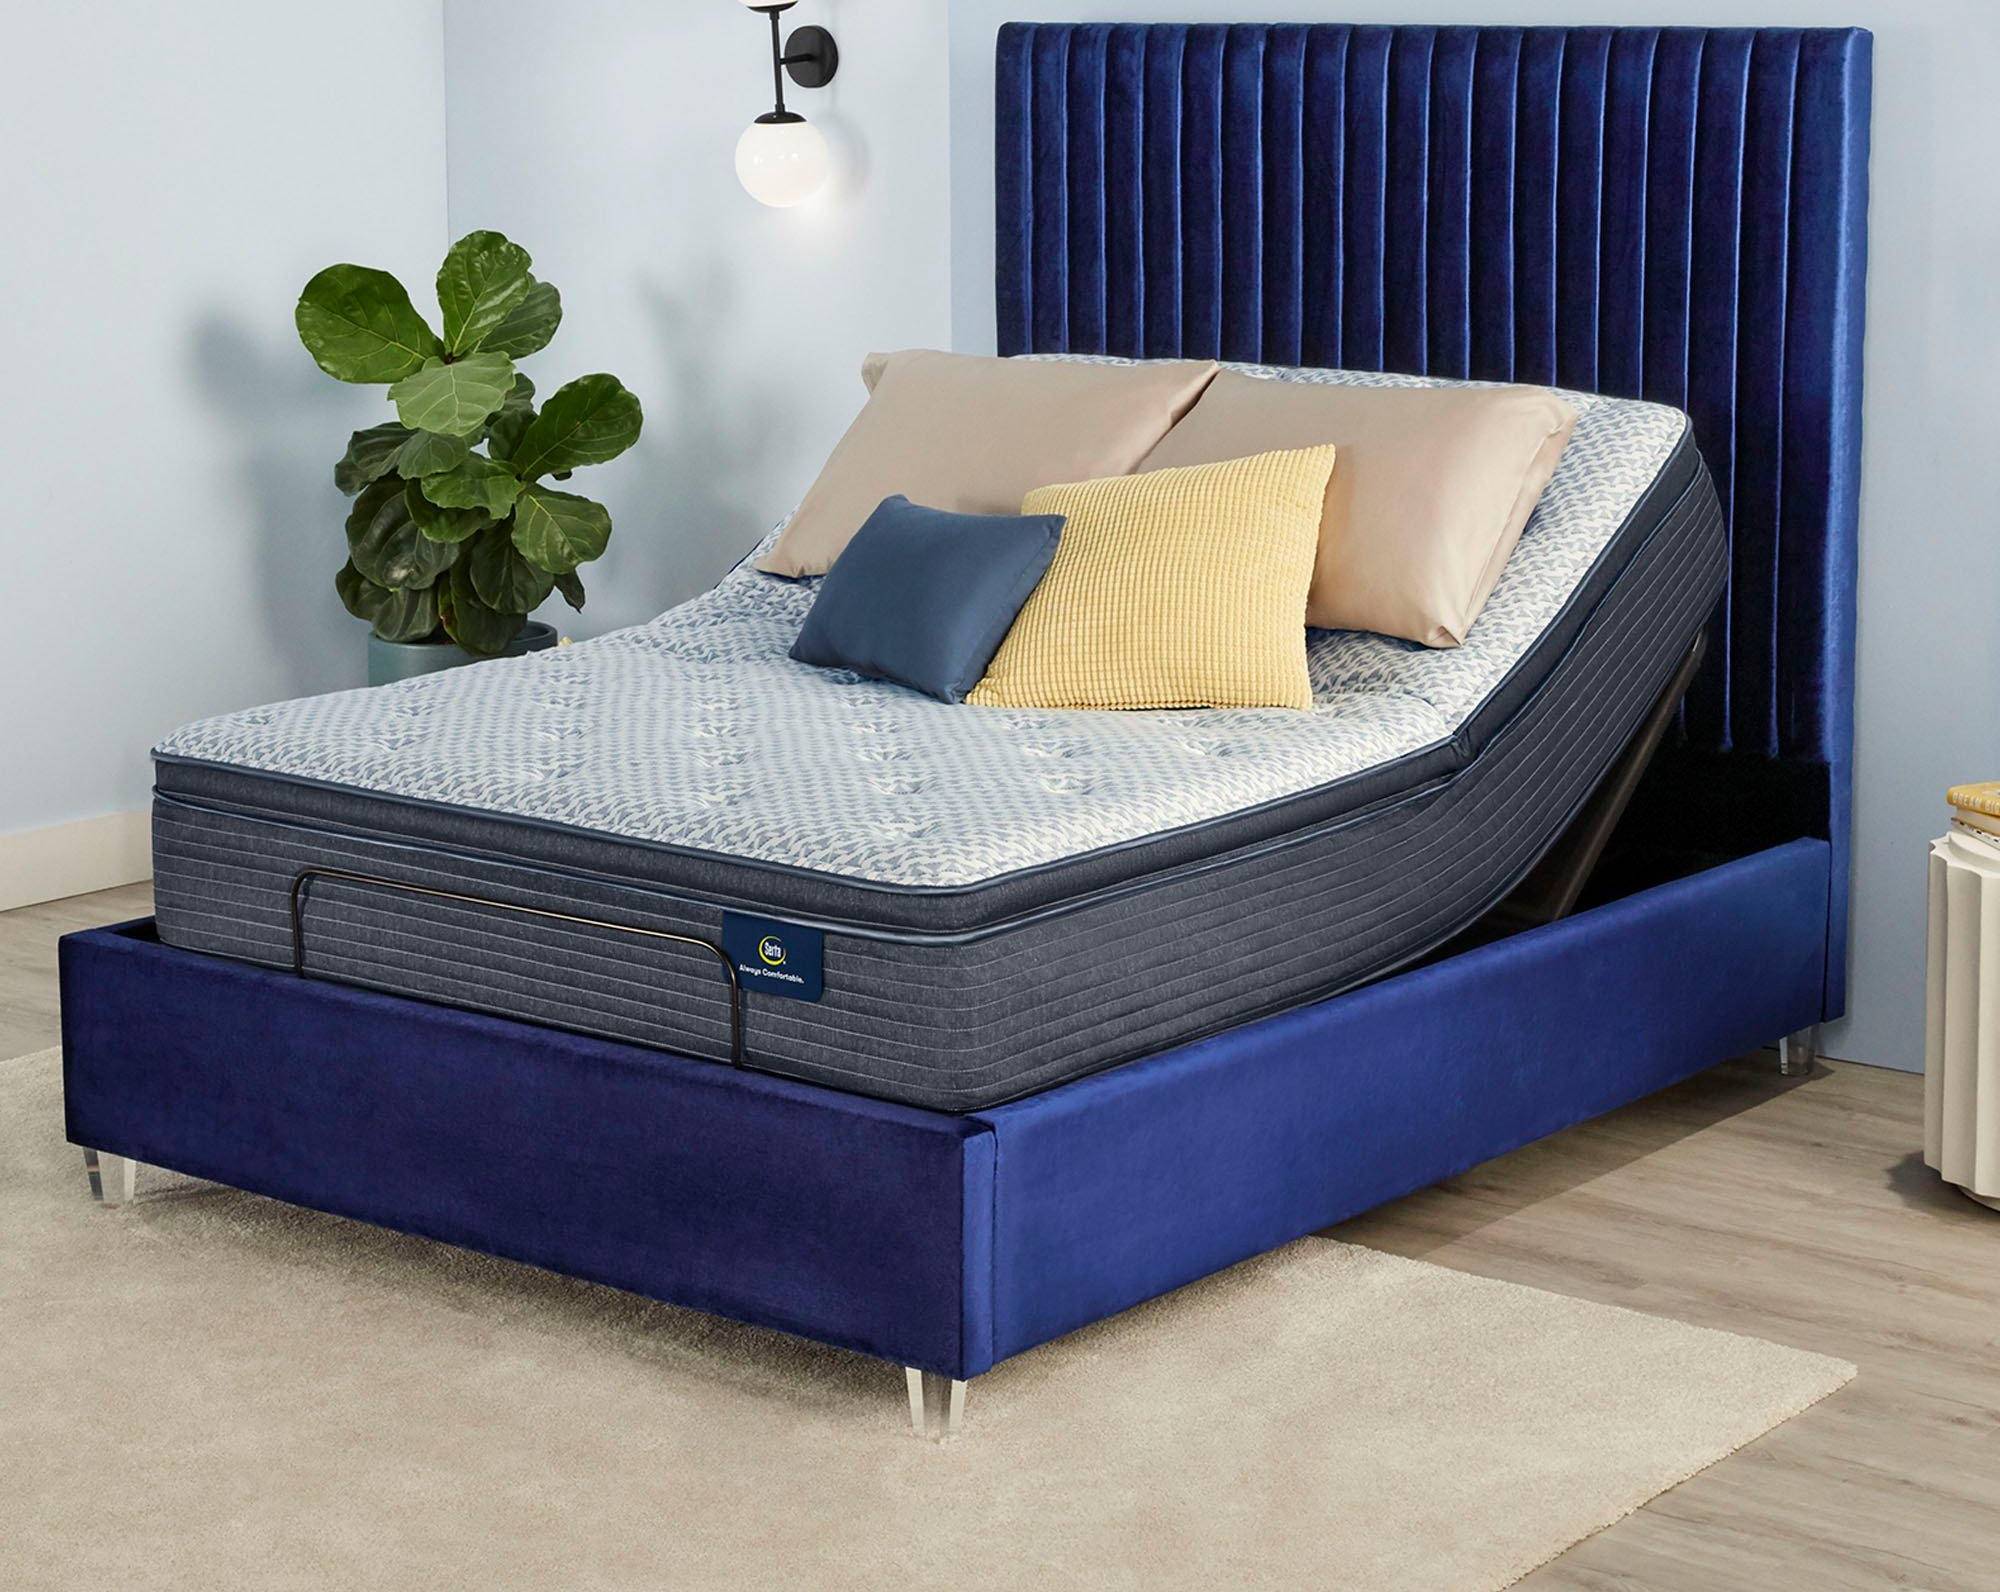 Serta Adjustable Beds Image